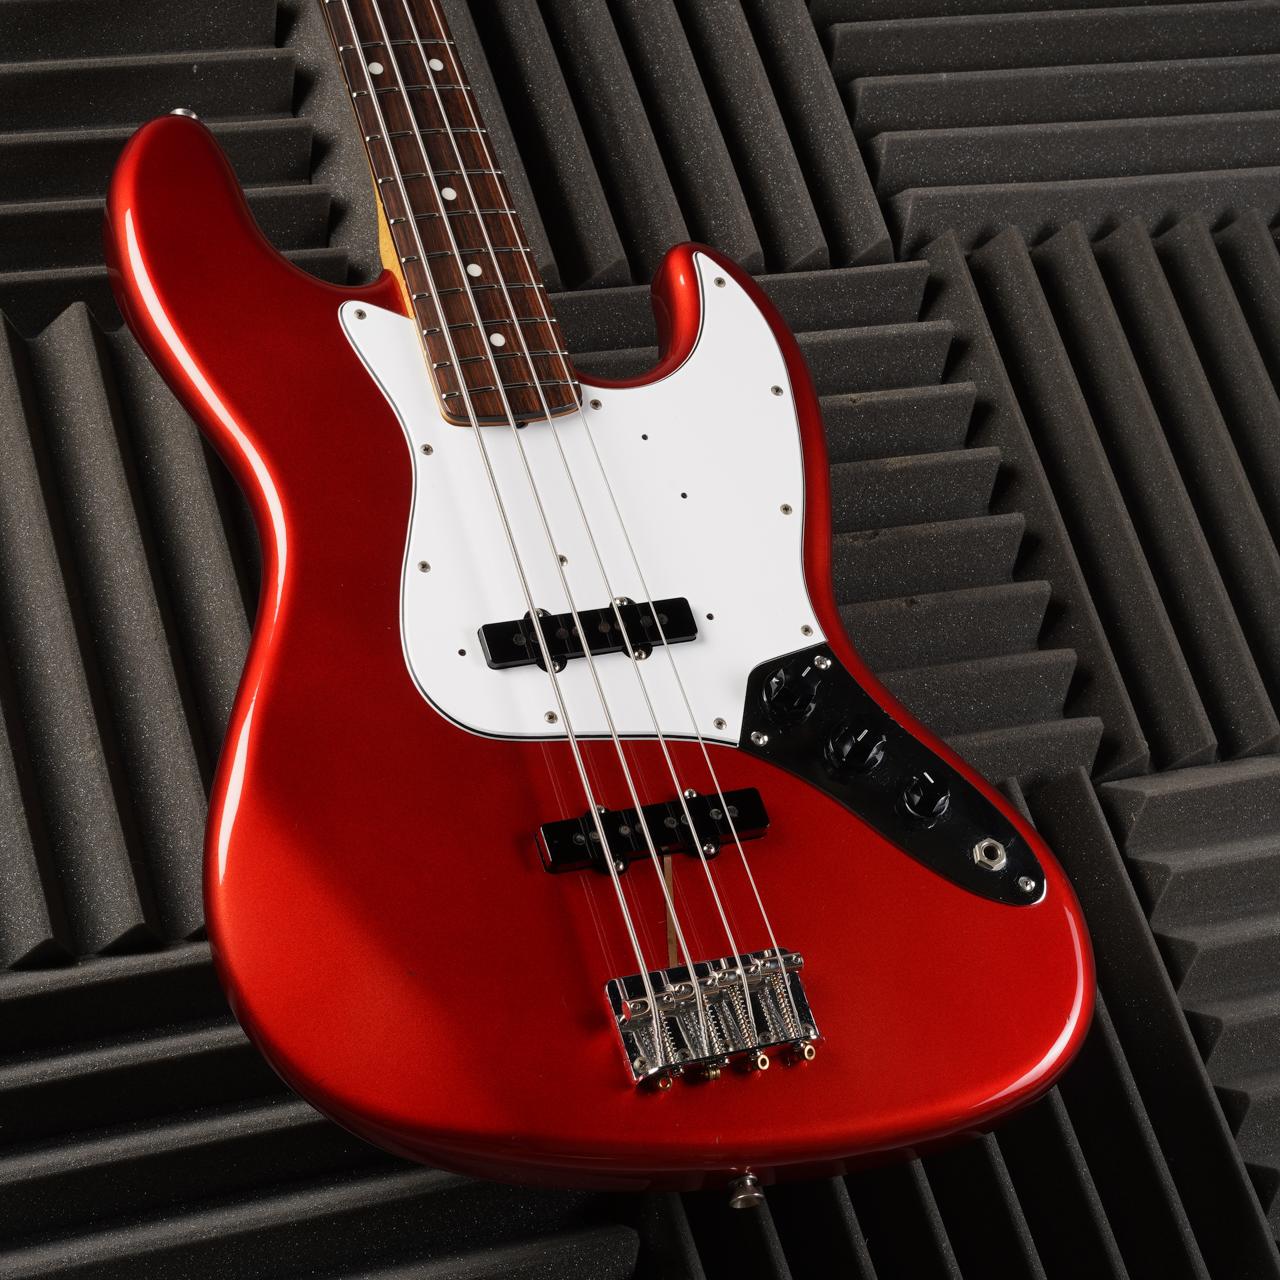 Fender JB-62 US Jazz Bass Reissue MIJ 1999-2002 Candy Apple Red